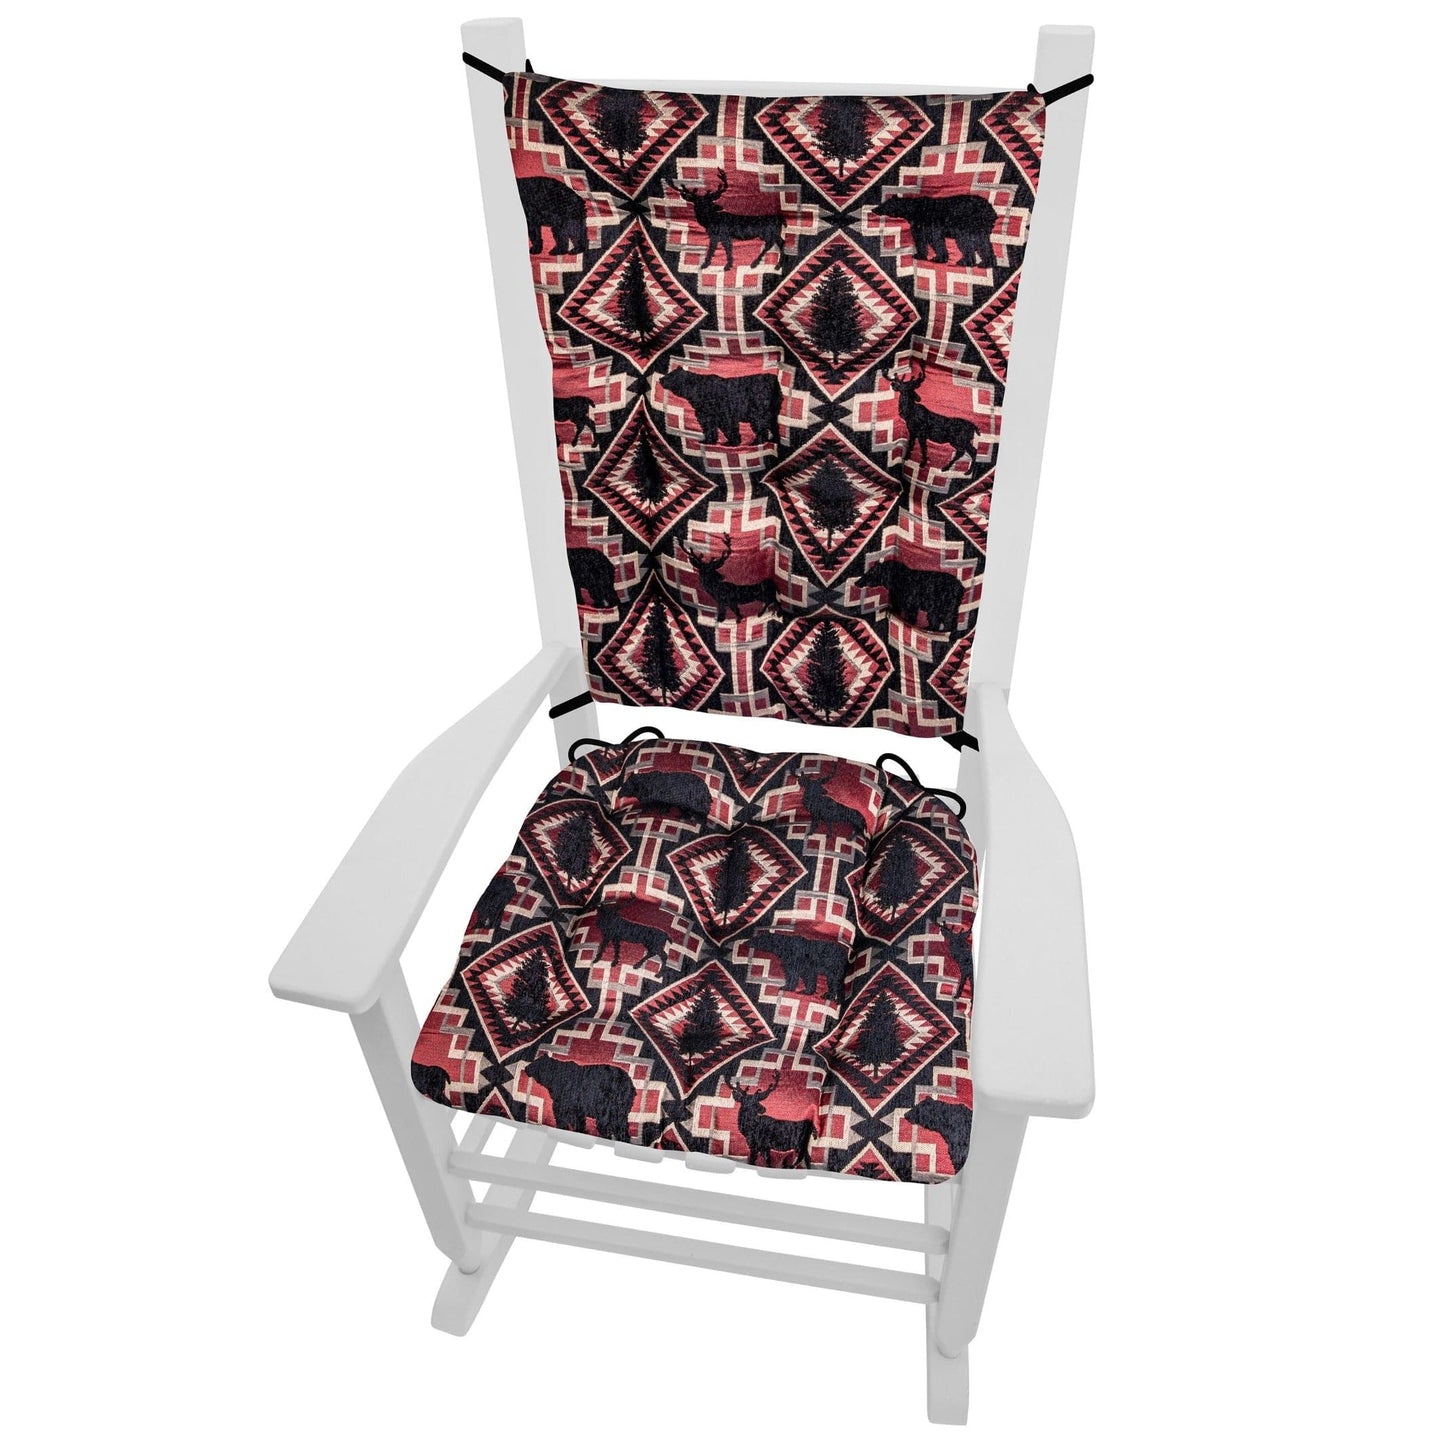 Woodlands Larston Brick Rocking Chair Cushions - Barnett Home Decor - Red & Black